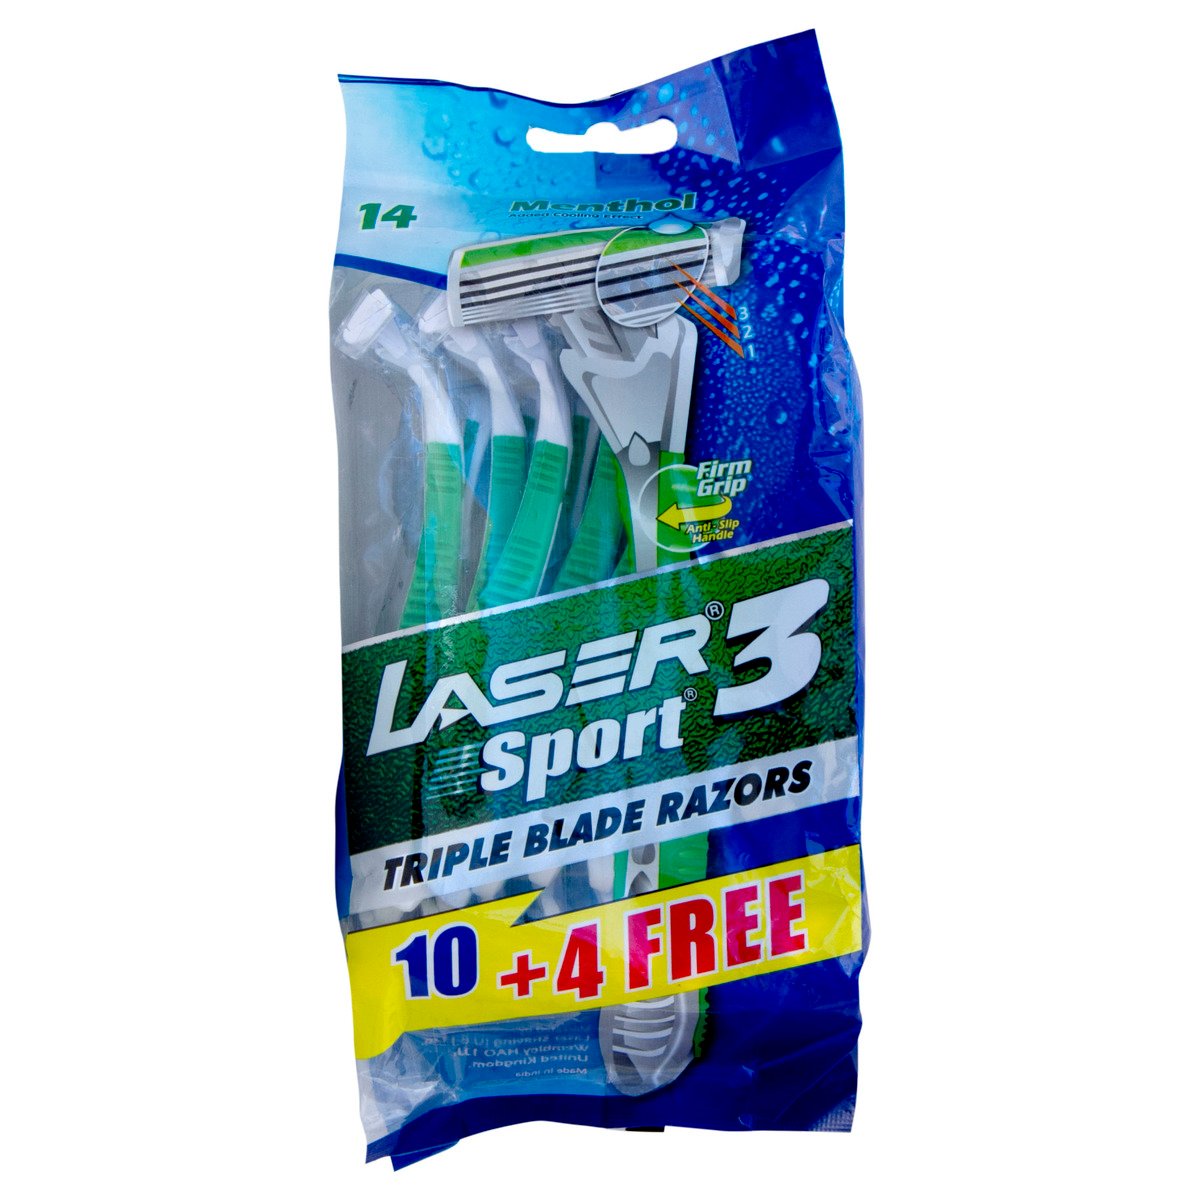 Laser Sport 3 Triple Blade Razors 10 + 4